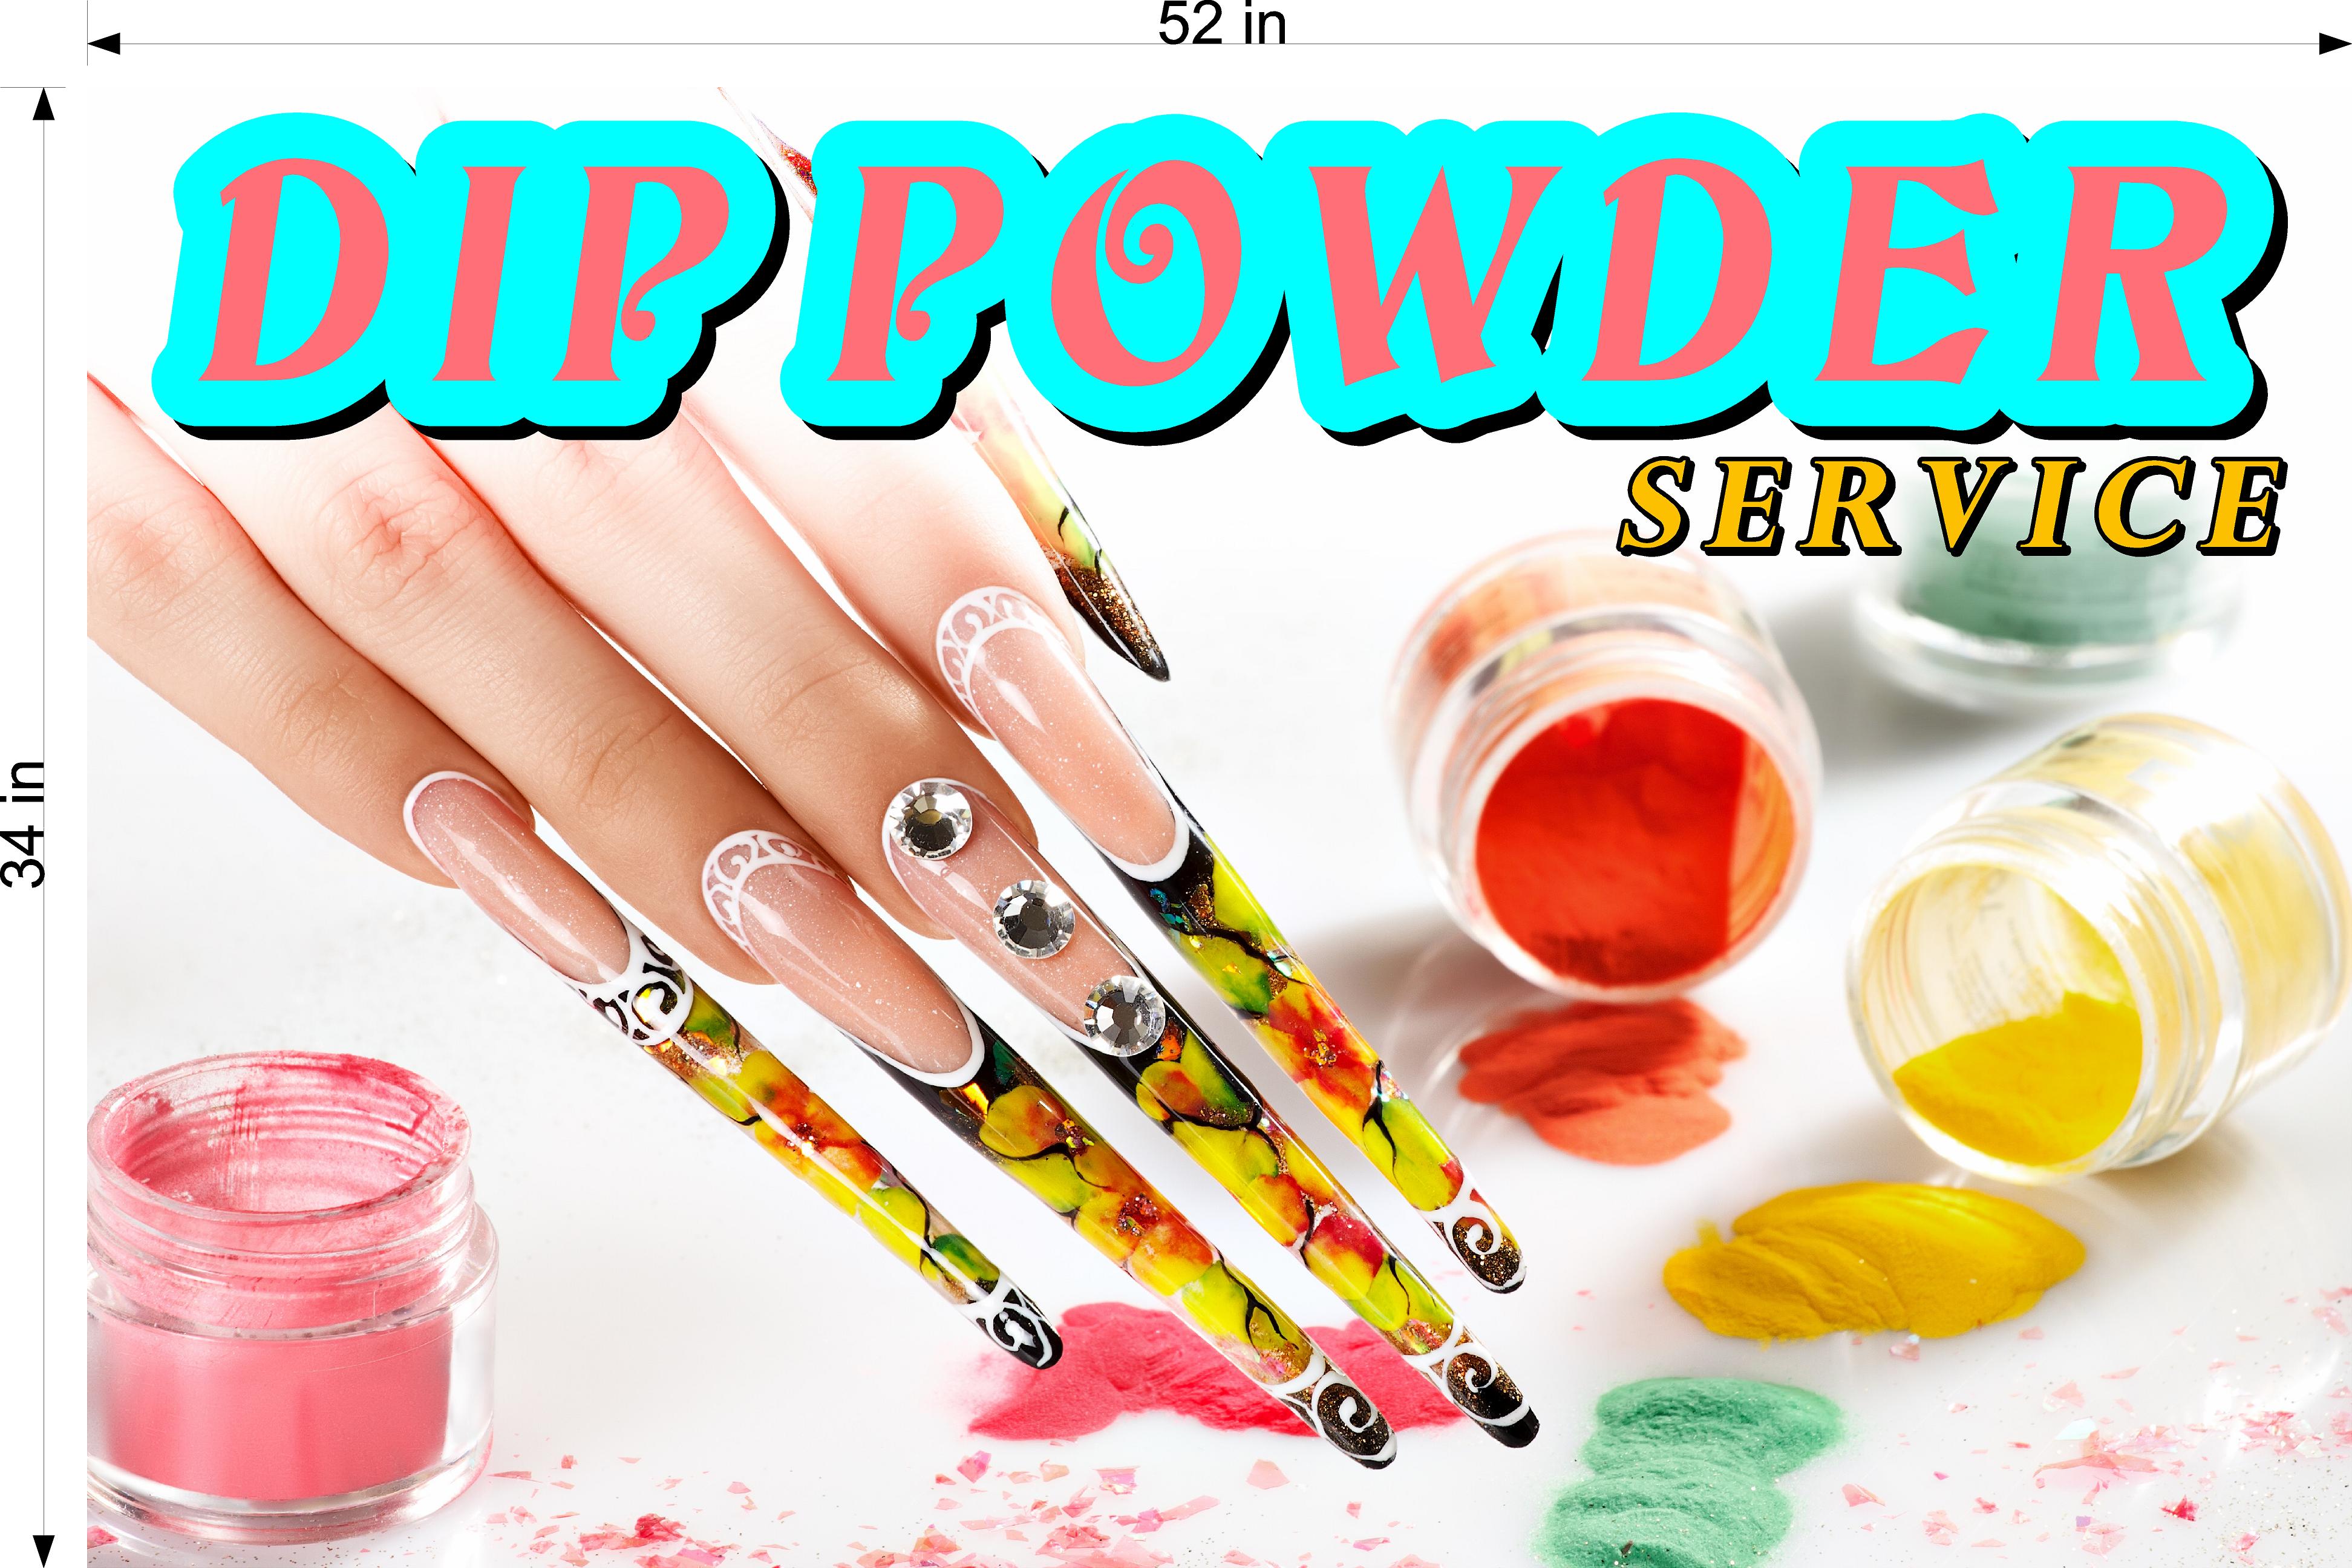 Dip Powder 10 Wallpaper Poster Decal with Adhesive Backing Wall Sticker Decor Nail Salon Sign Horizontal